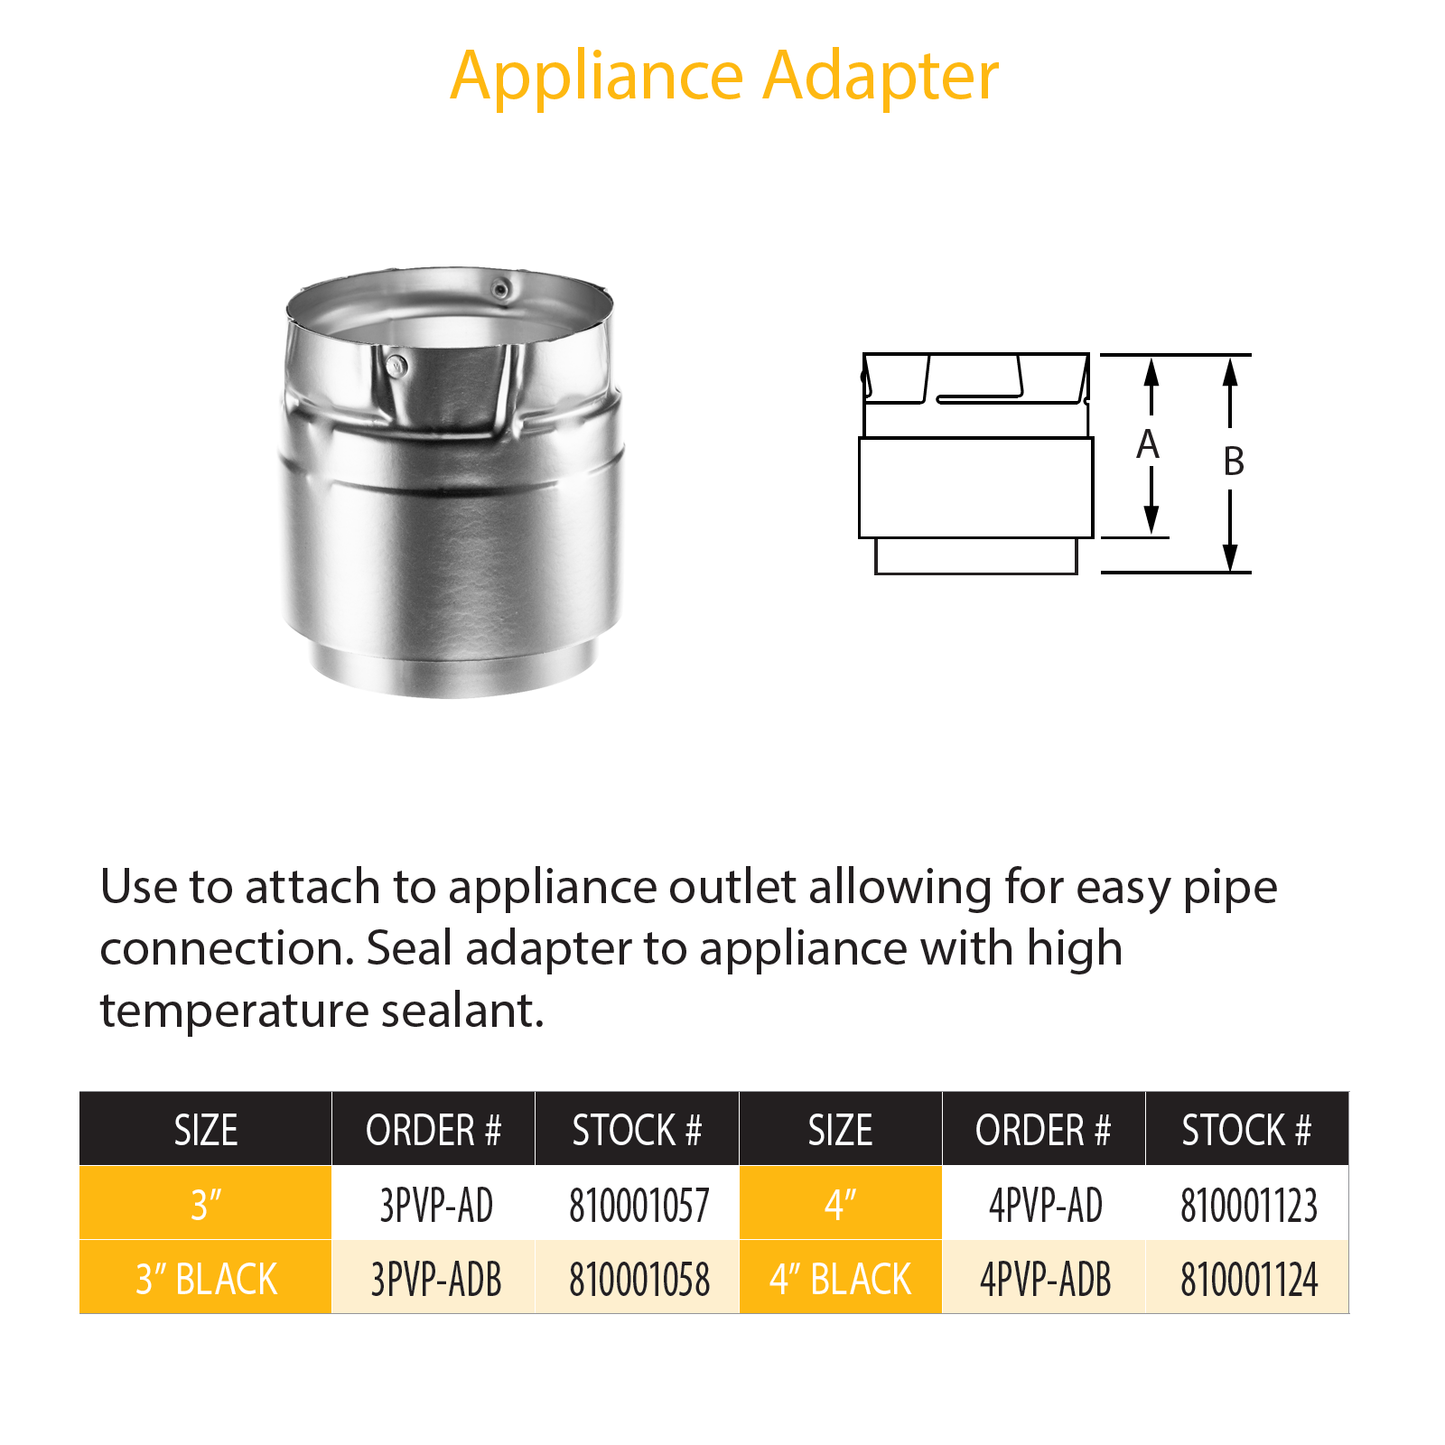 DURAVENT PELLETVENT PRO 4 Stove Appliance Adapter #4PVP-AD PELLET